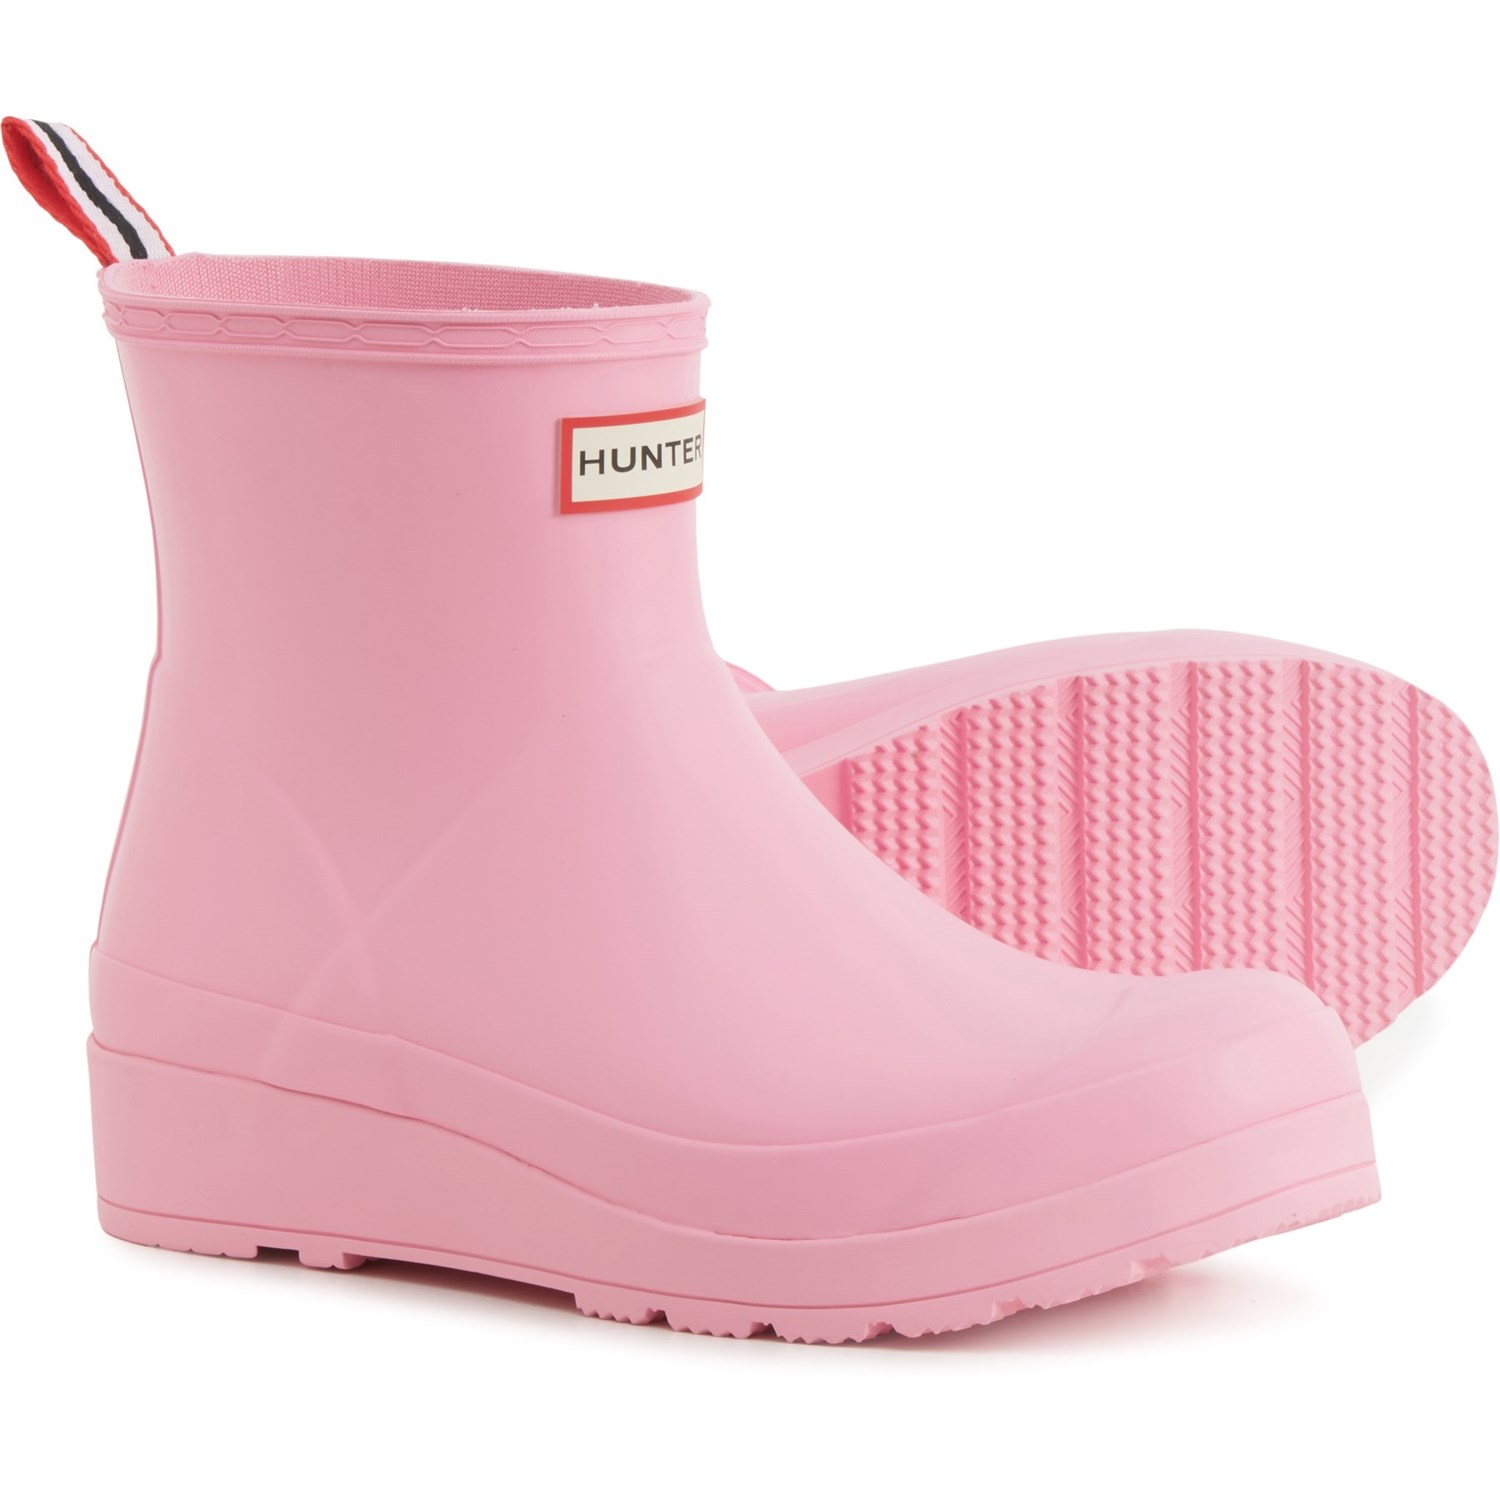 HUNTER Play Short Rain Boots (For Women) - Save 29%